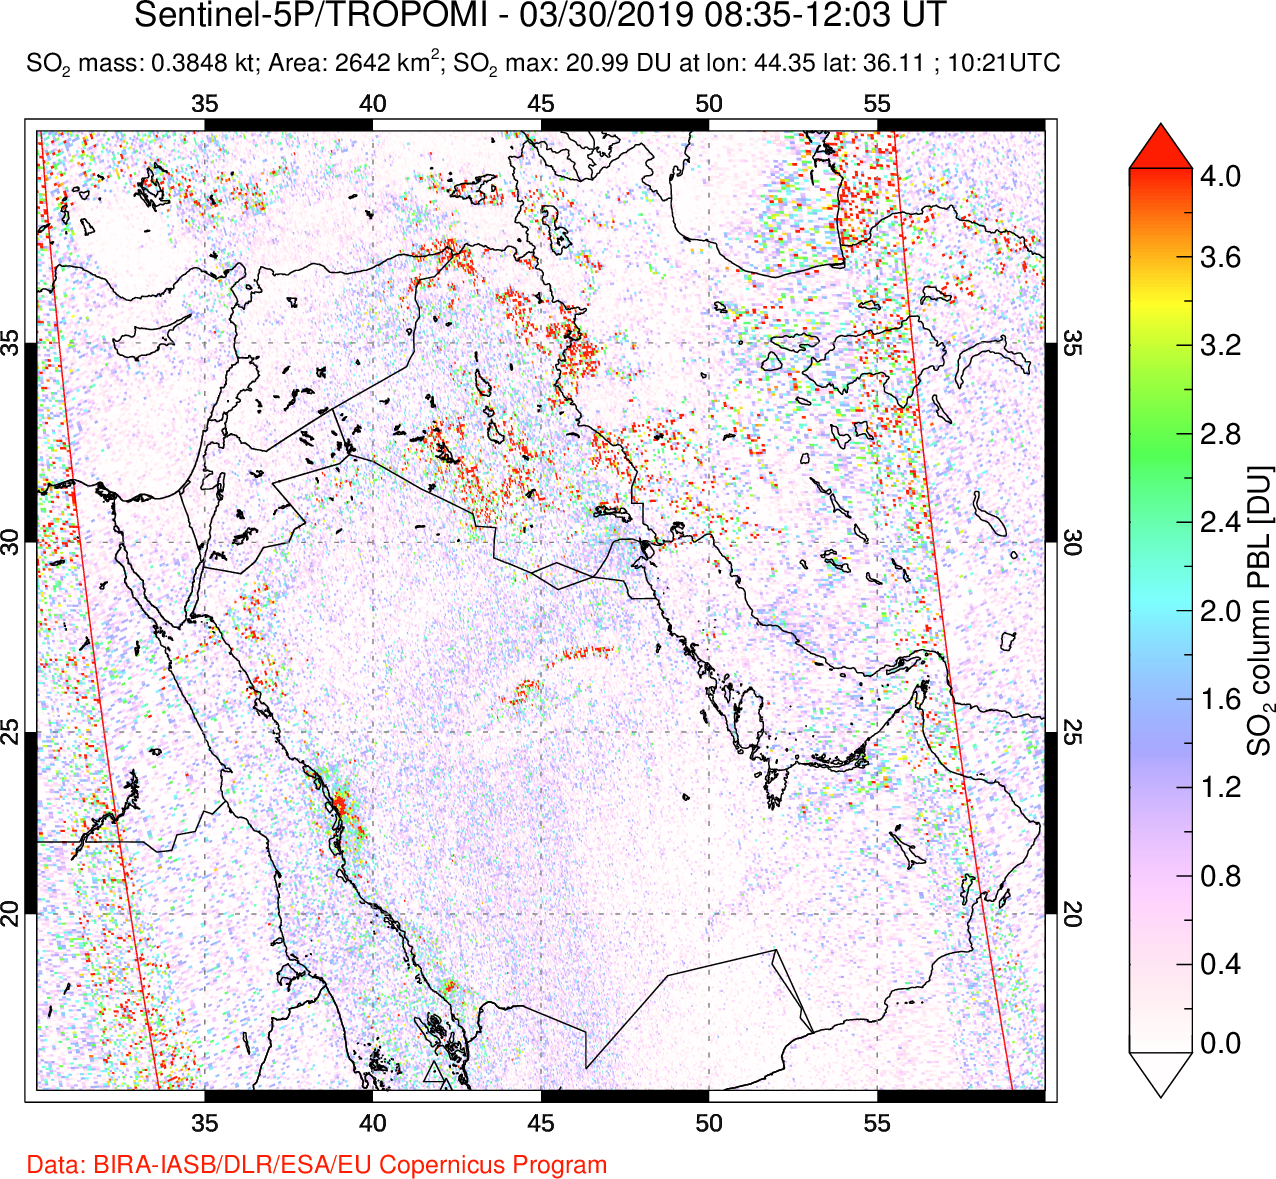 A sulfur dioxide image over Middle East on Mar 30, 2019.